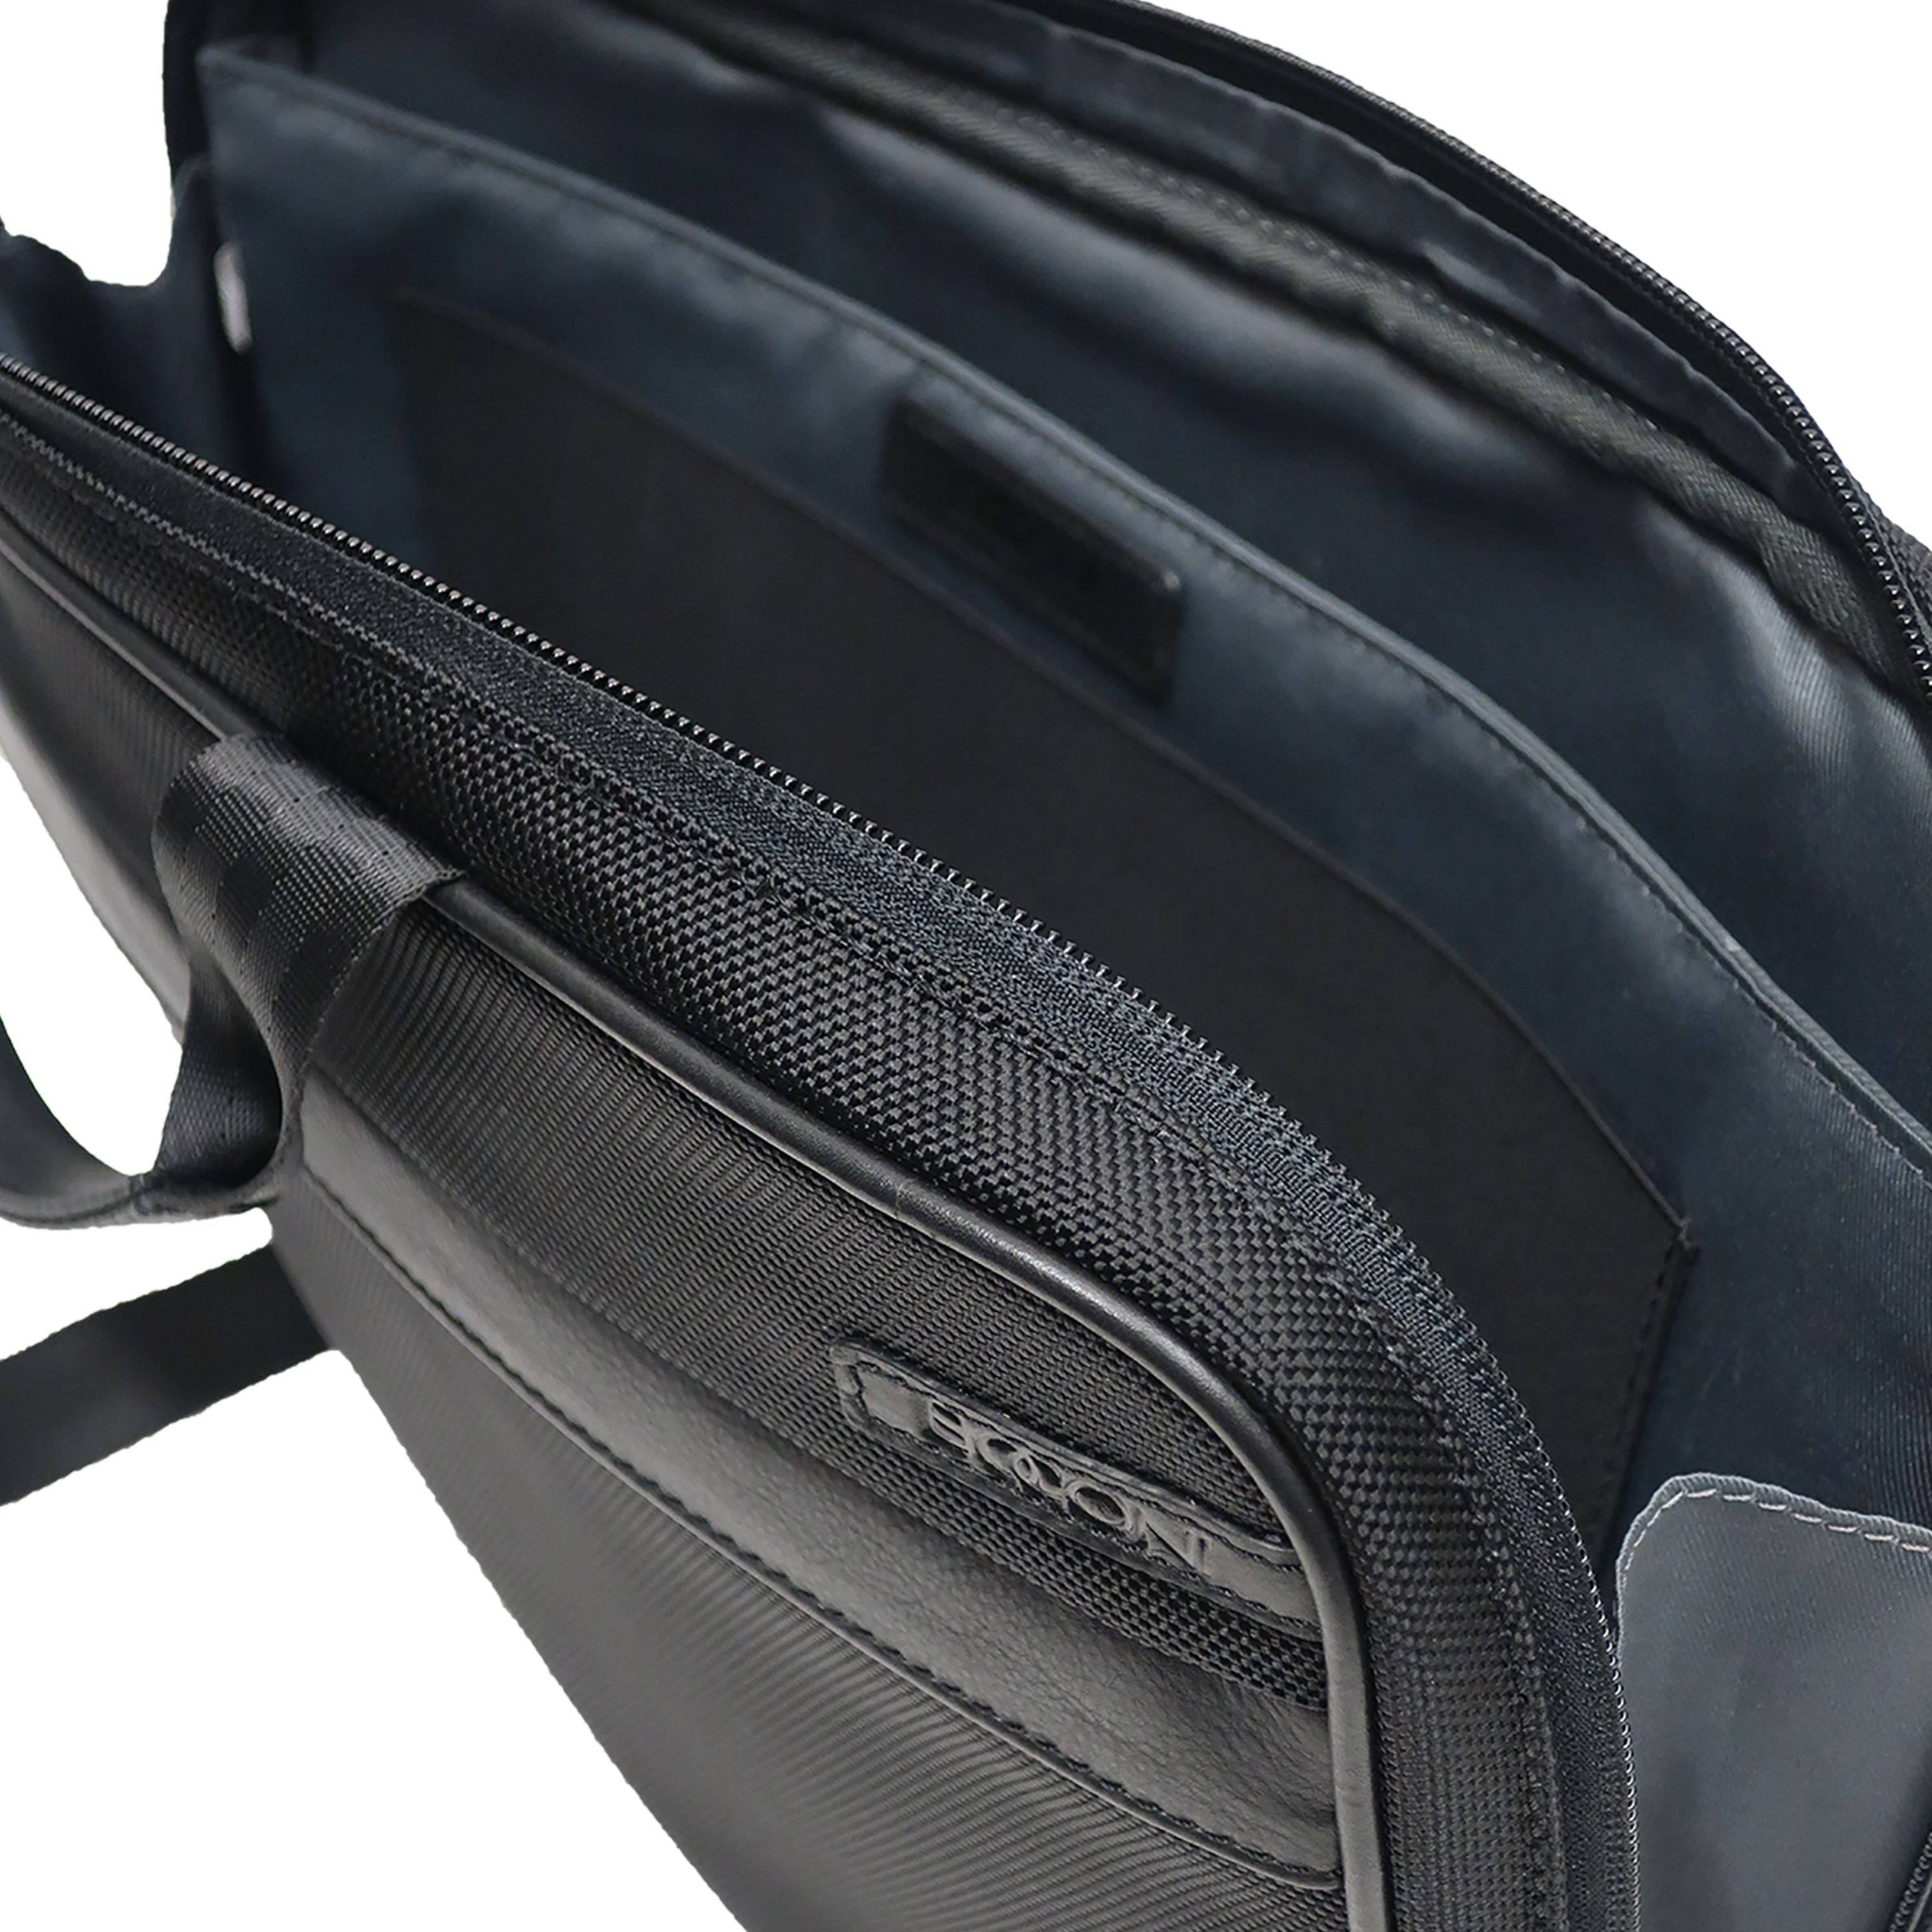 padded laptop sleeve ballistic nylon leather trim laptop bag